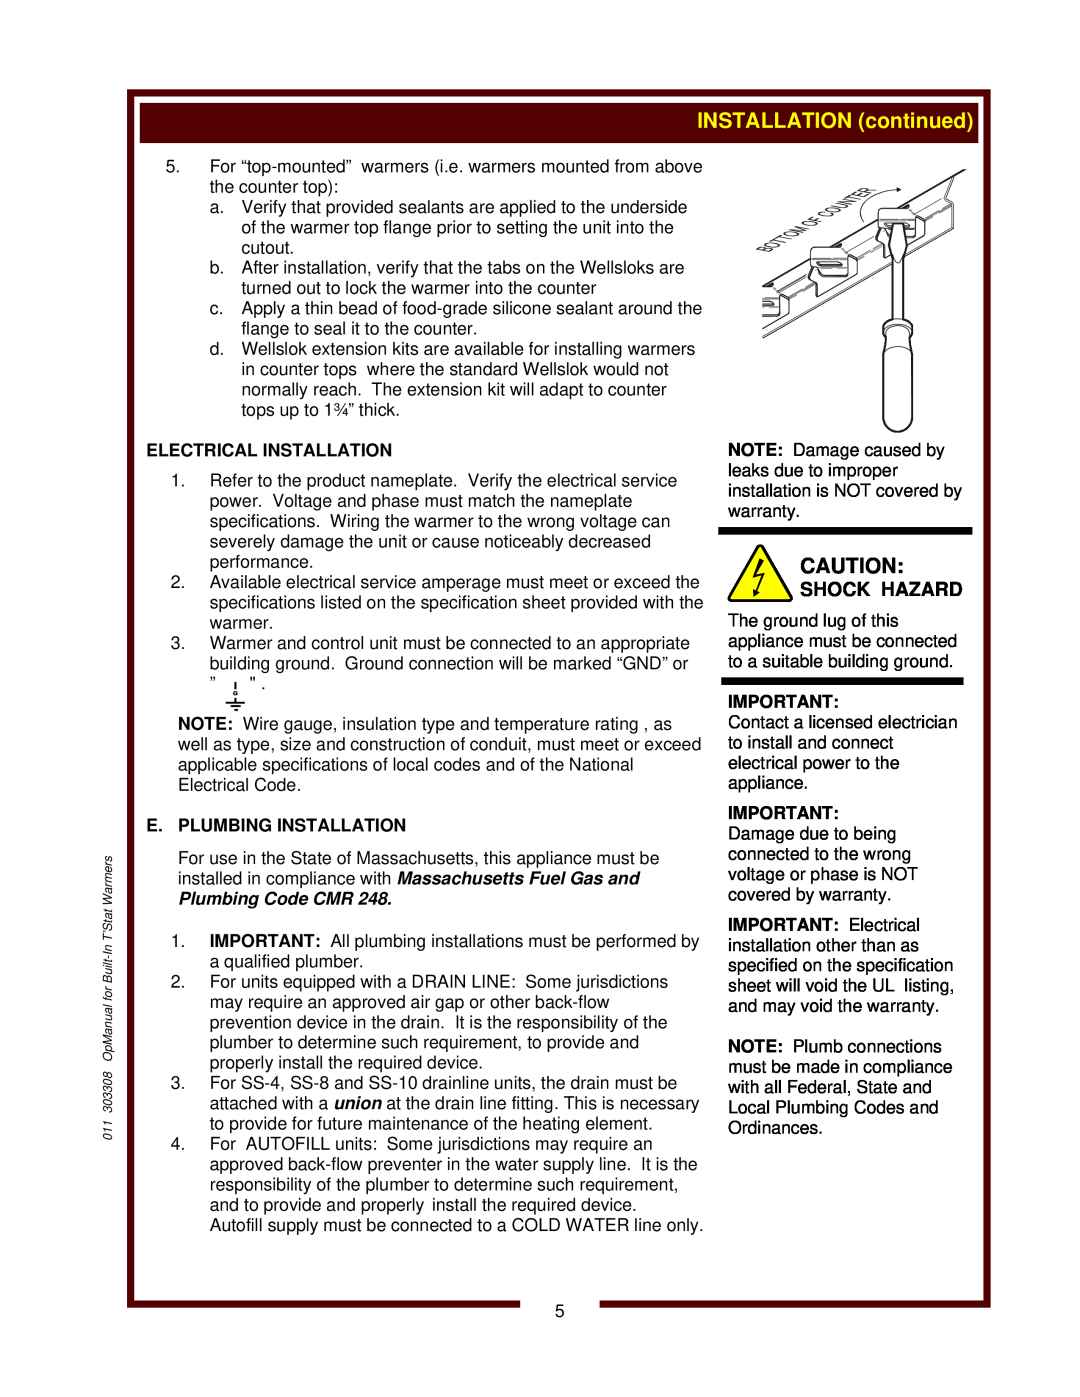 Wells MOD-427TDMAF, SS-10ULTD Shock Hazard, Electrical Installation, E. Plumbing Installation, Plumbing Code CMR 